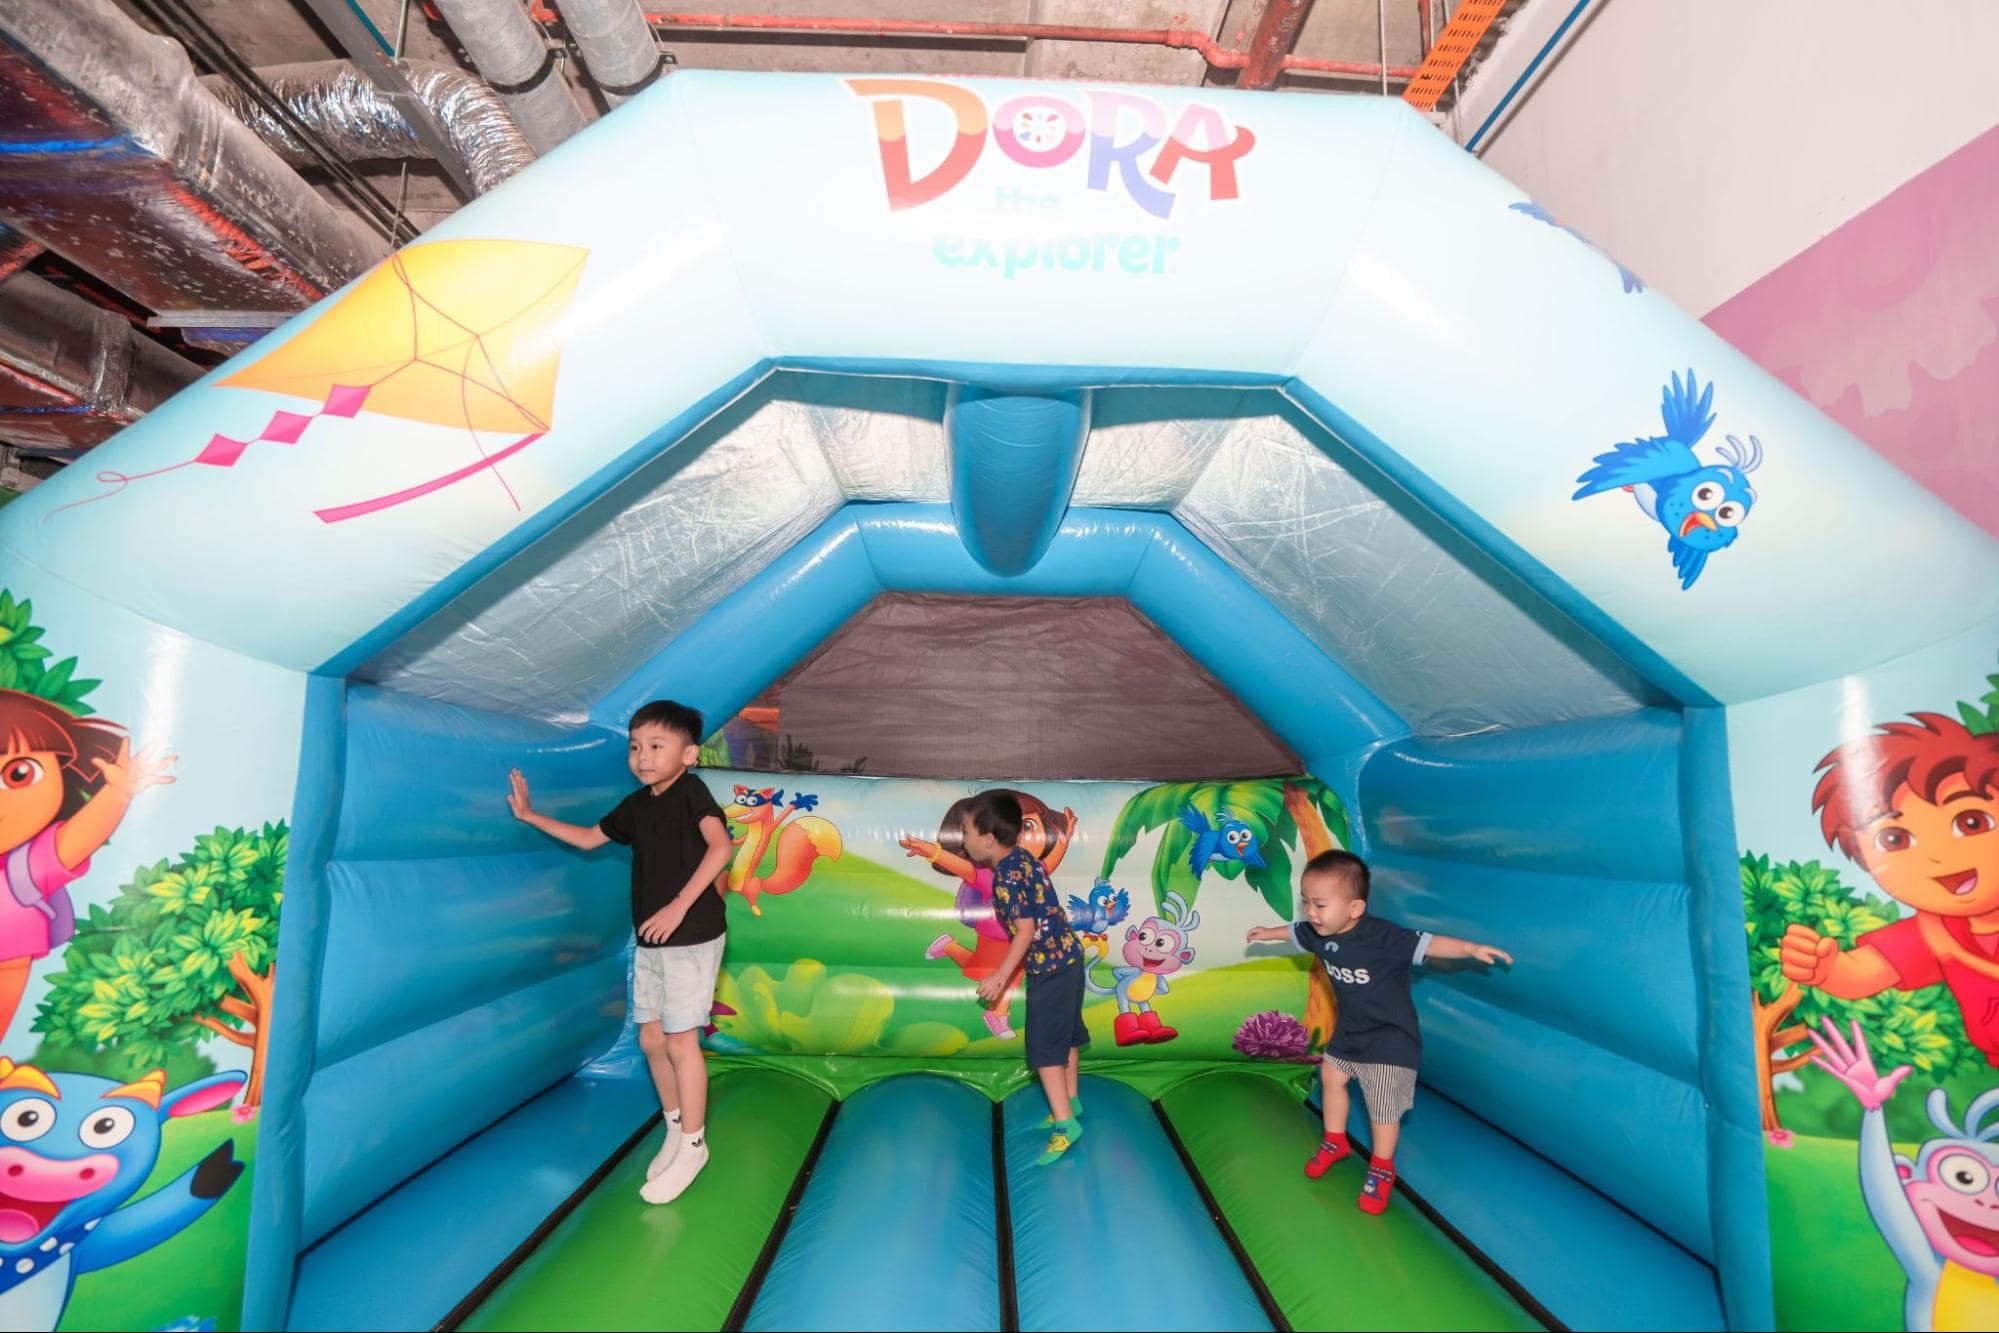  dora the explorer bouncy castle